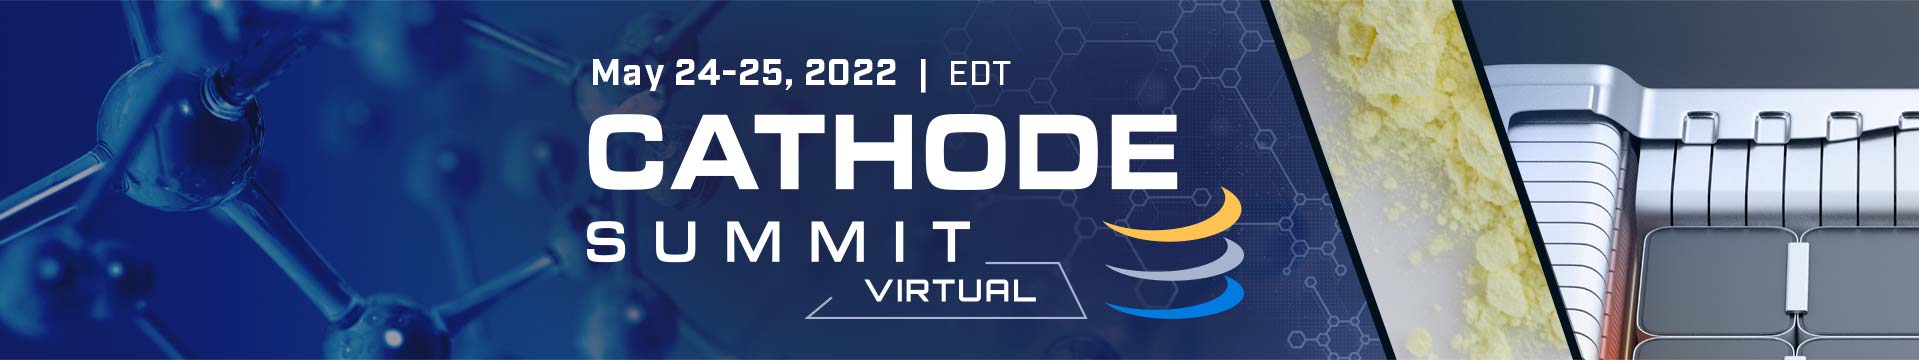 Cathode Summit Virtual 2022 Banner Image